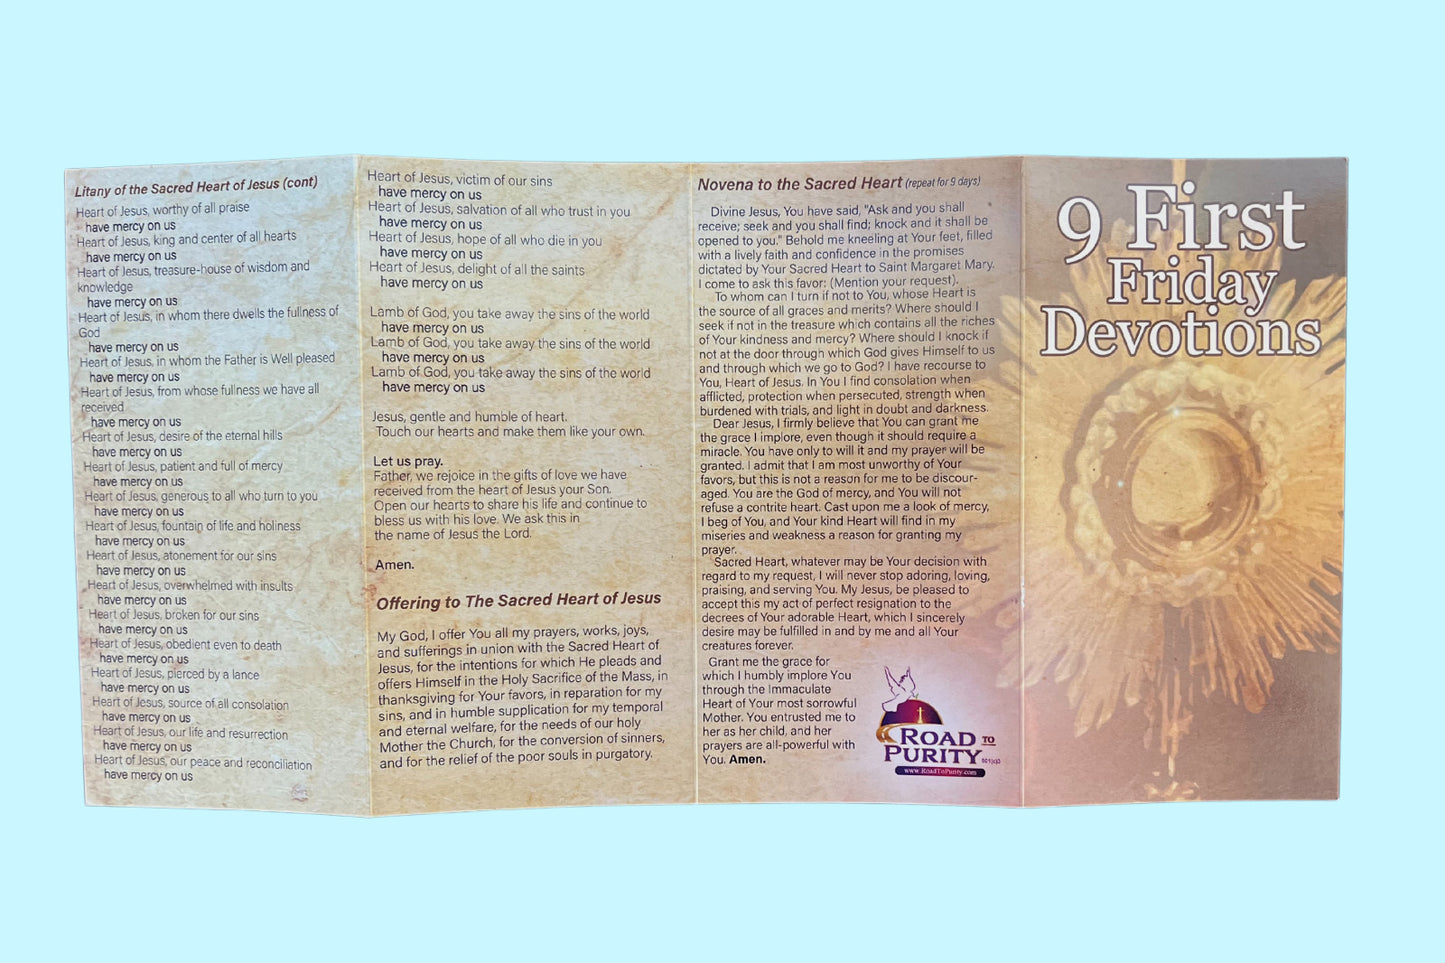 Nine First Friday Devotions Folded Prayer Card